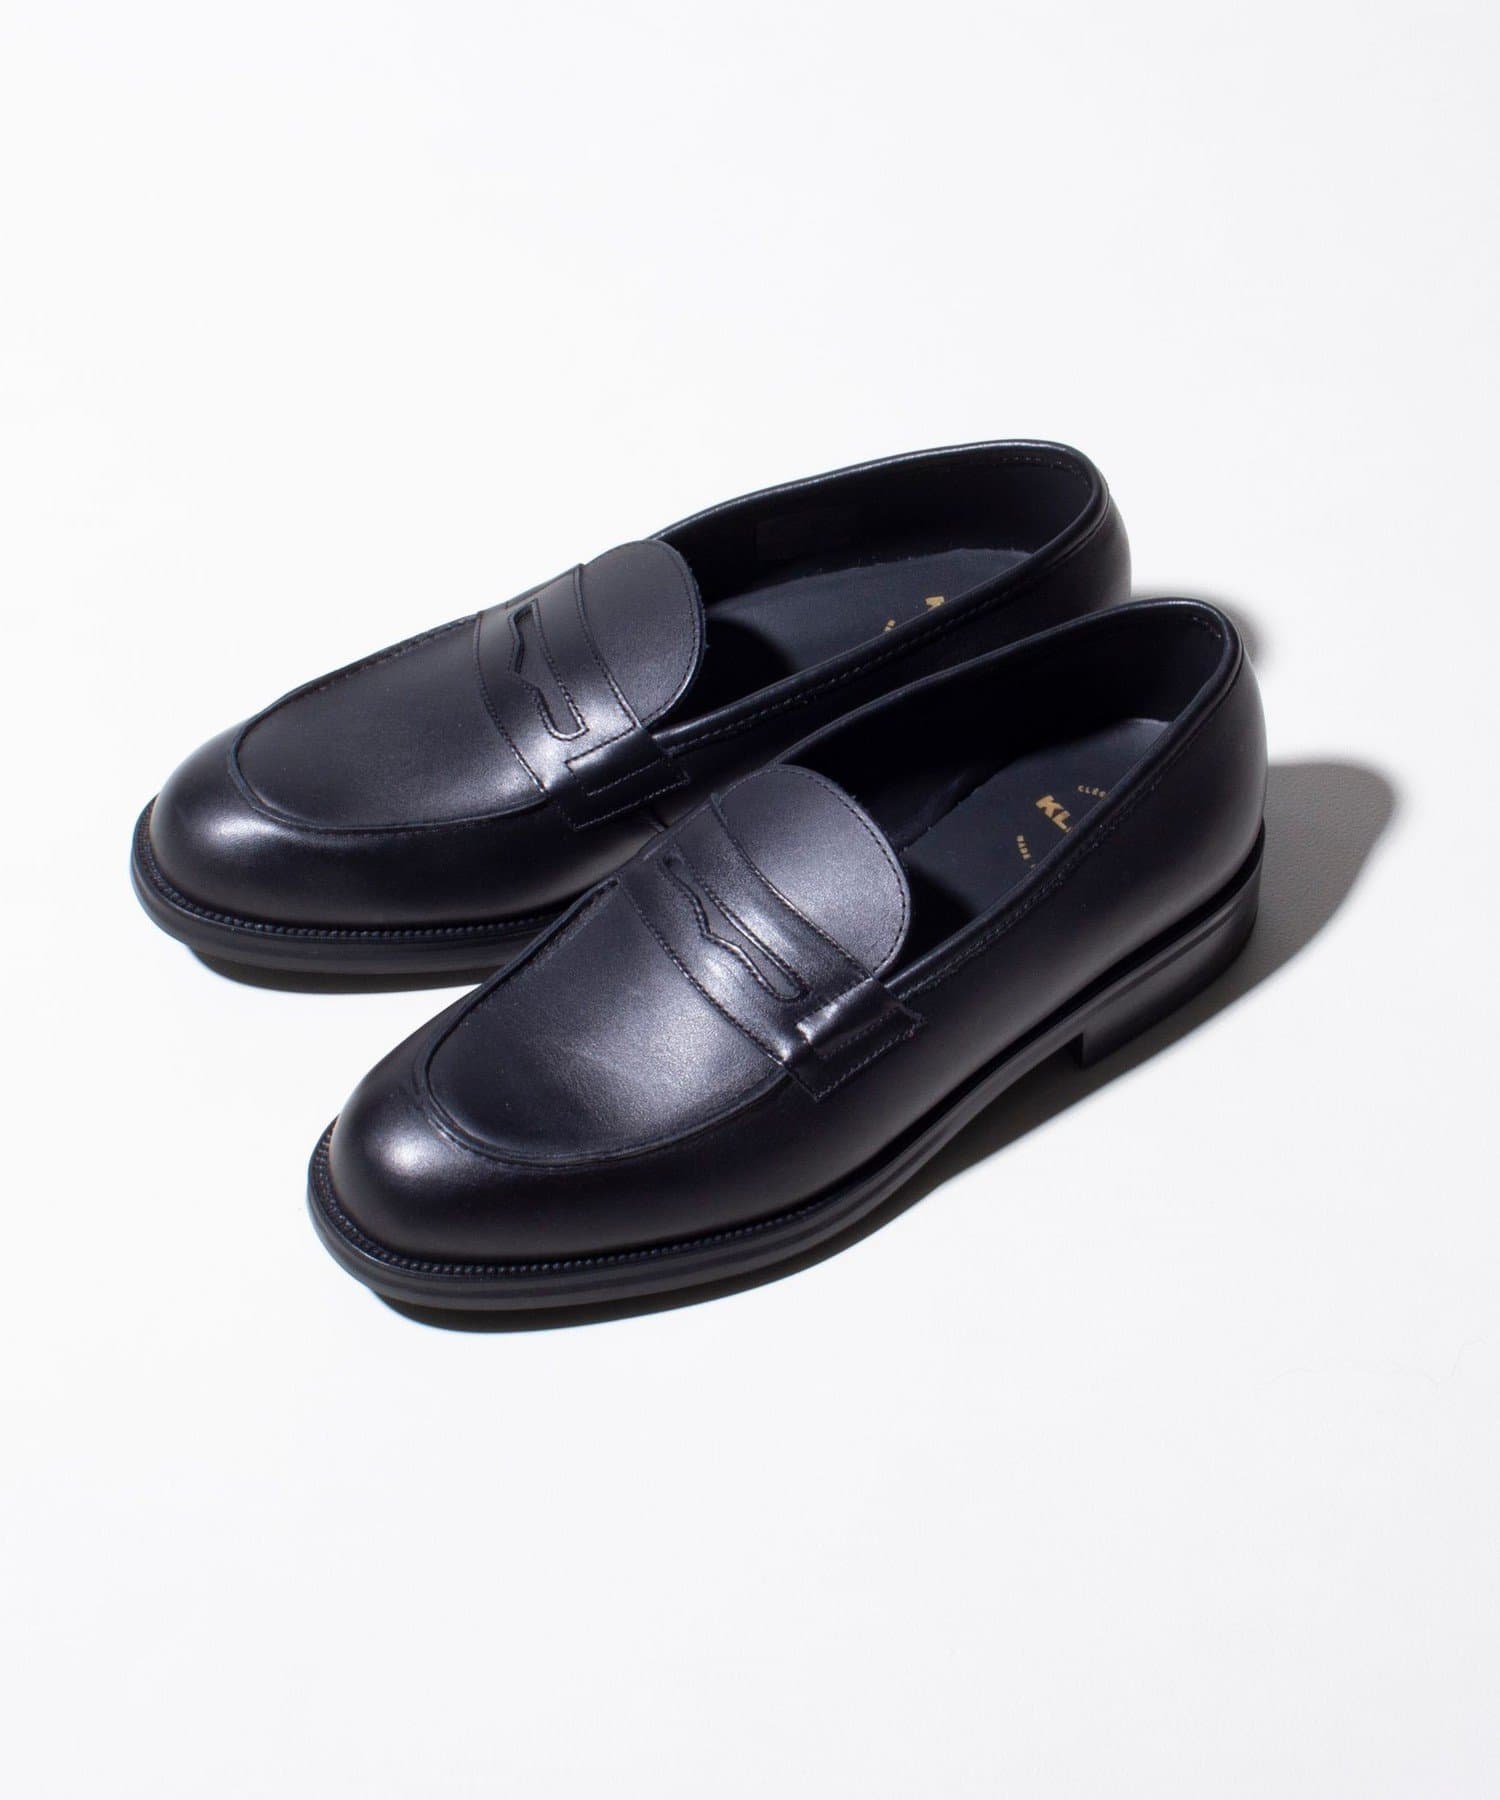 KLEMAN】DALIOR/ダリオール コインローファー 革靴 レザー | FREDY 